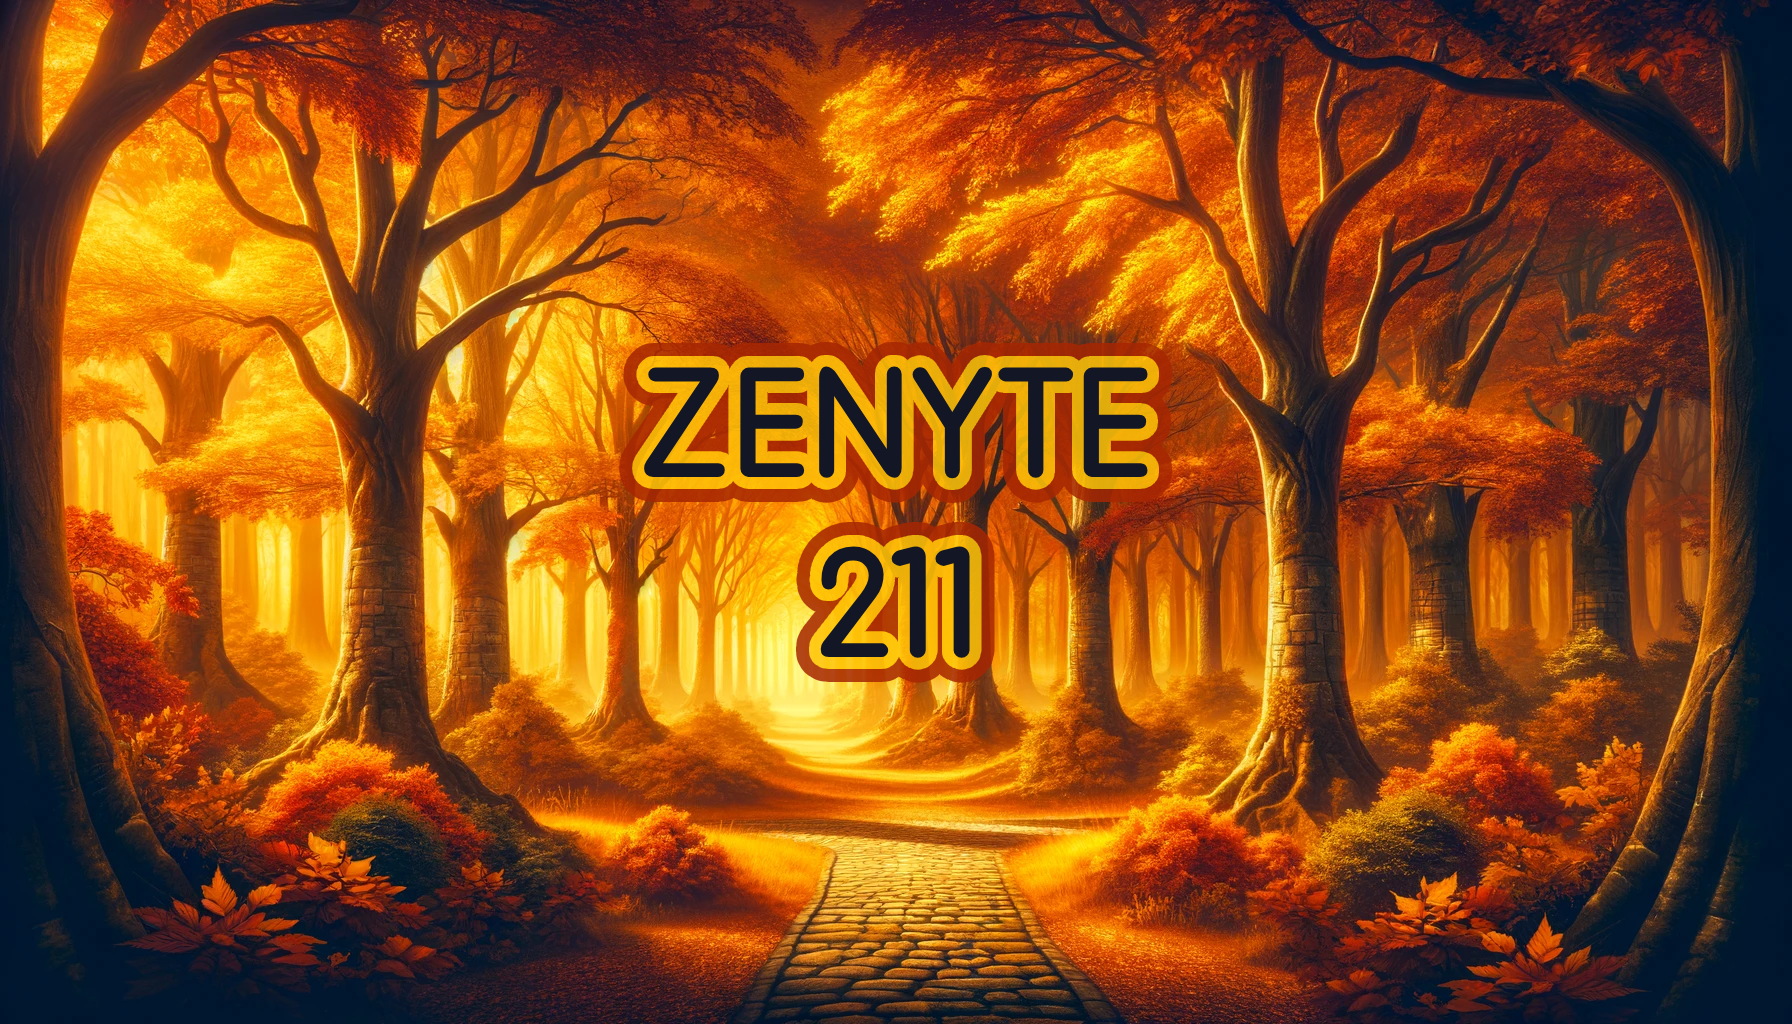 Zenyte 211 Source